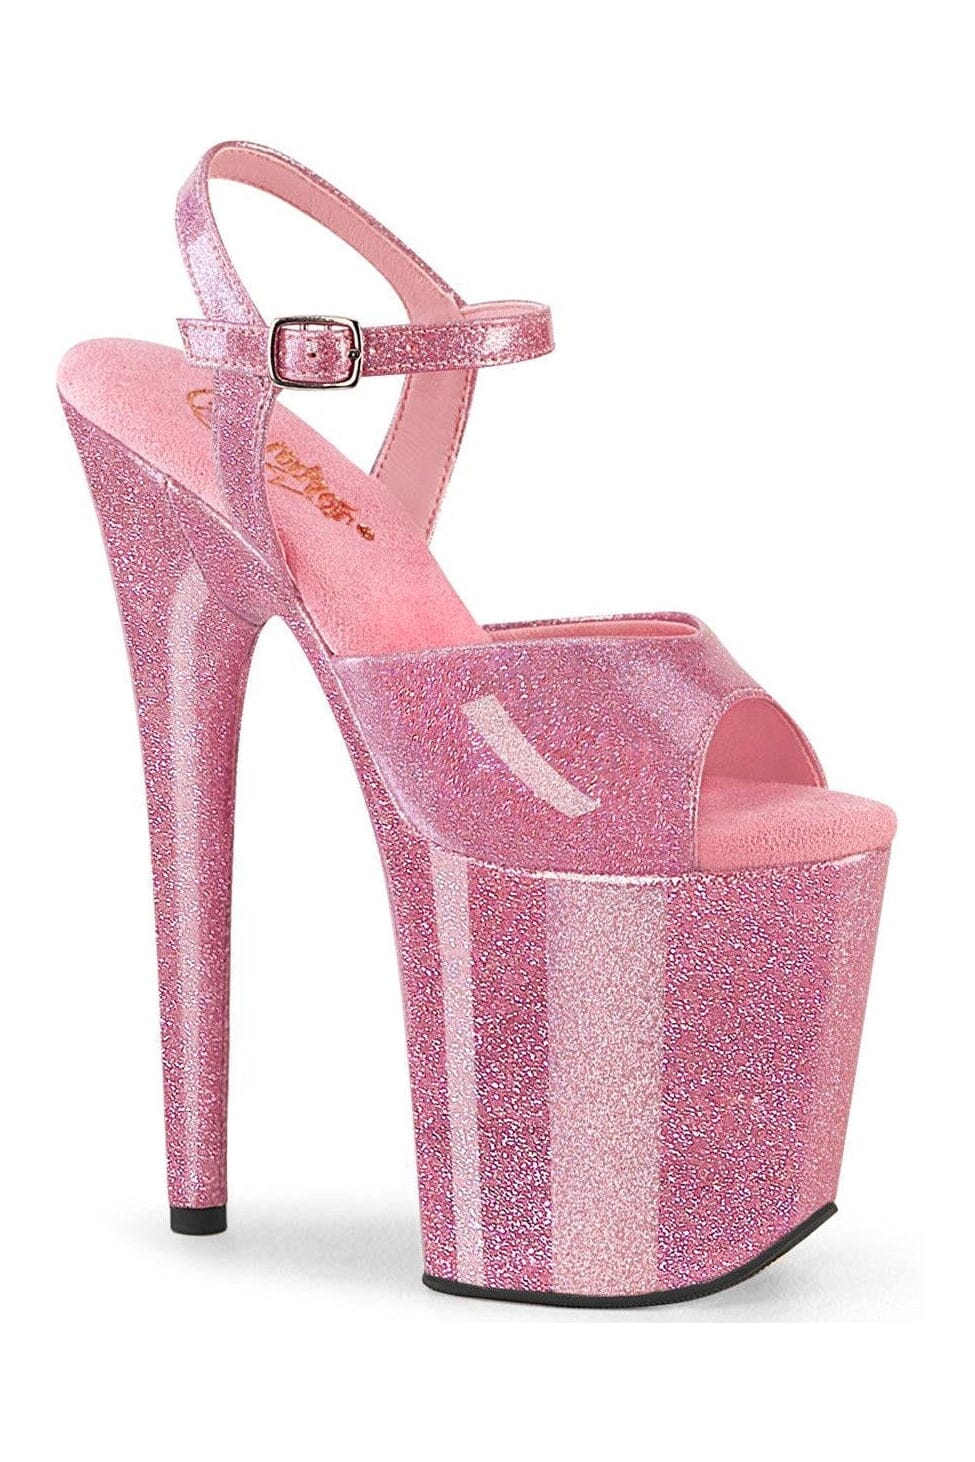 FLAMINGO-809GP Pink Glitter Patent Sandal